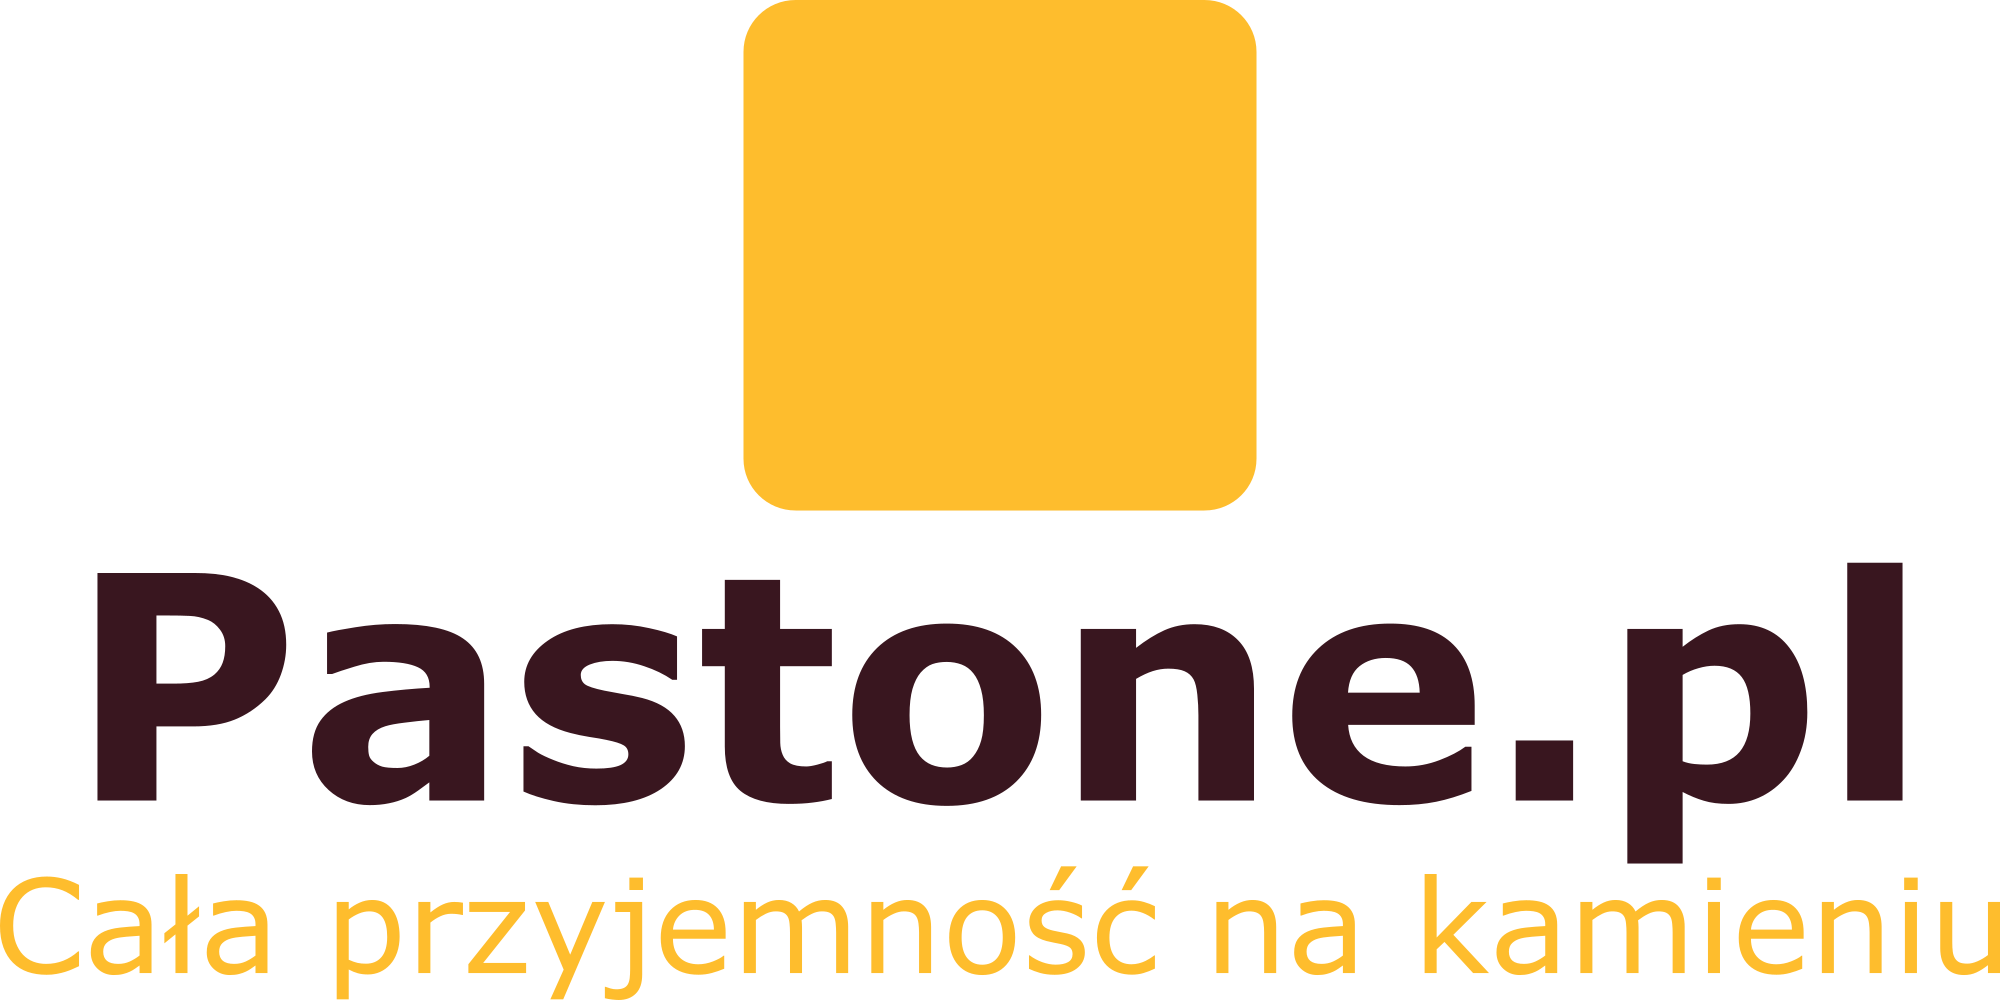 Postone.pl